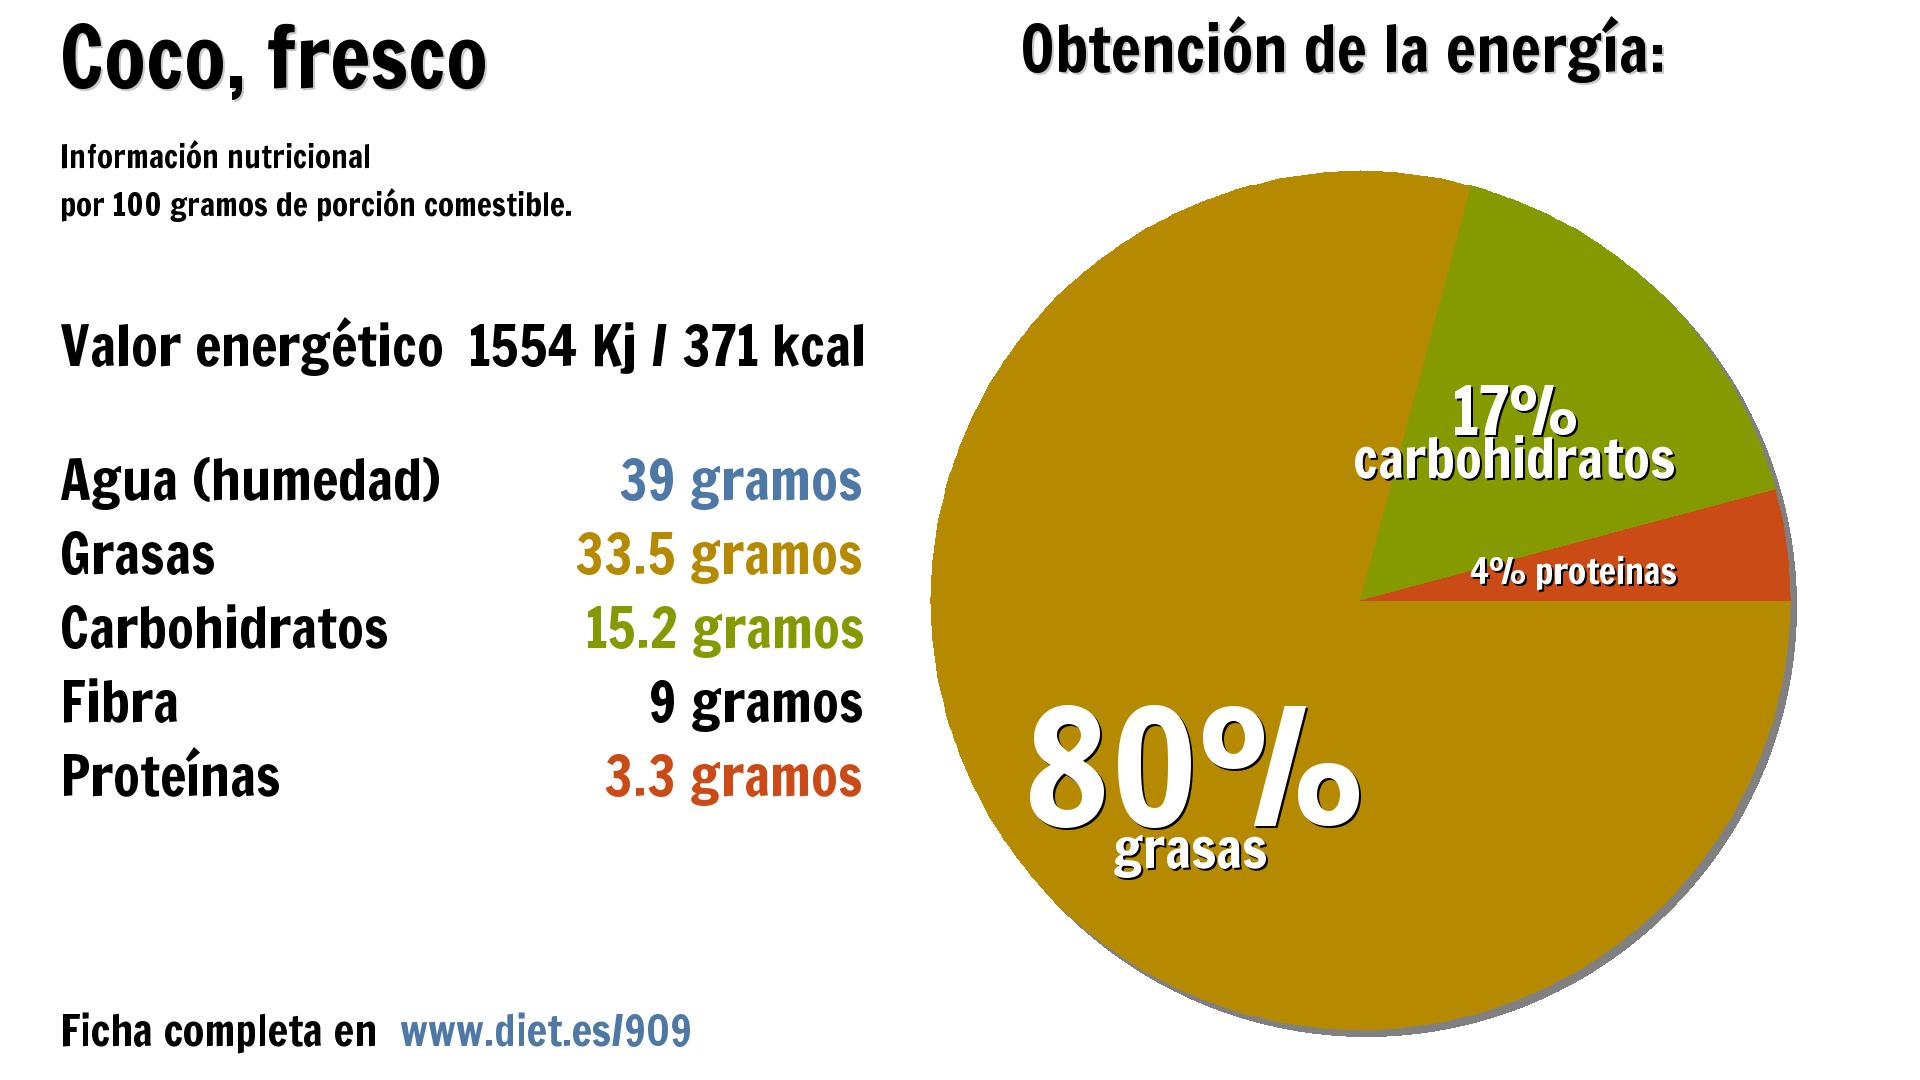 Coco, fresco: energía 1554 Kj, agua 39 g., grasas 34 g., carbohidratos 15 g., fibra 9 g. y proteínas 3 g.